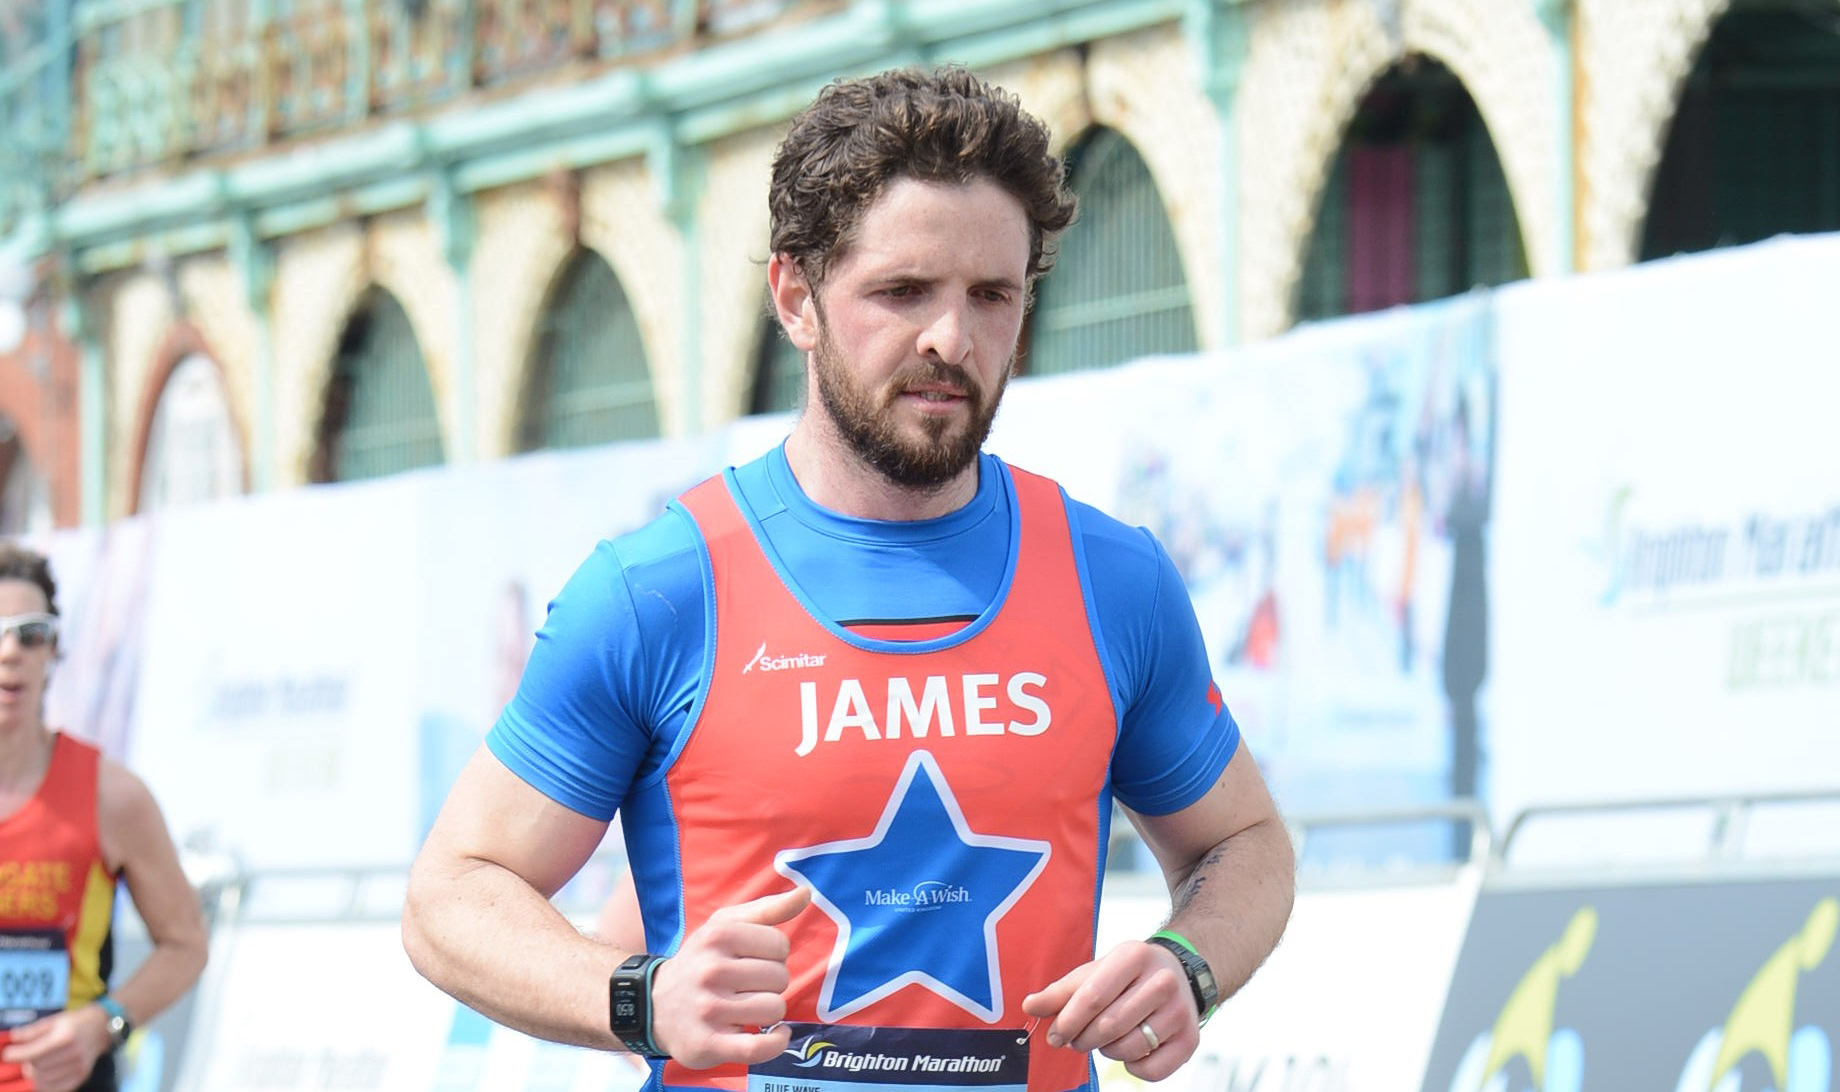 James running the Marathon